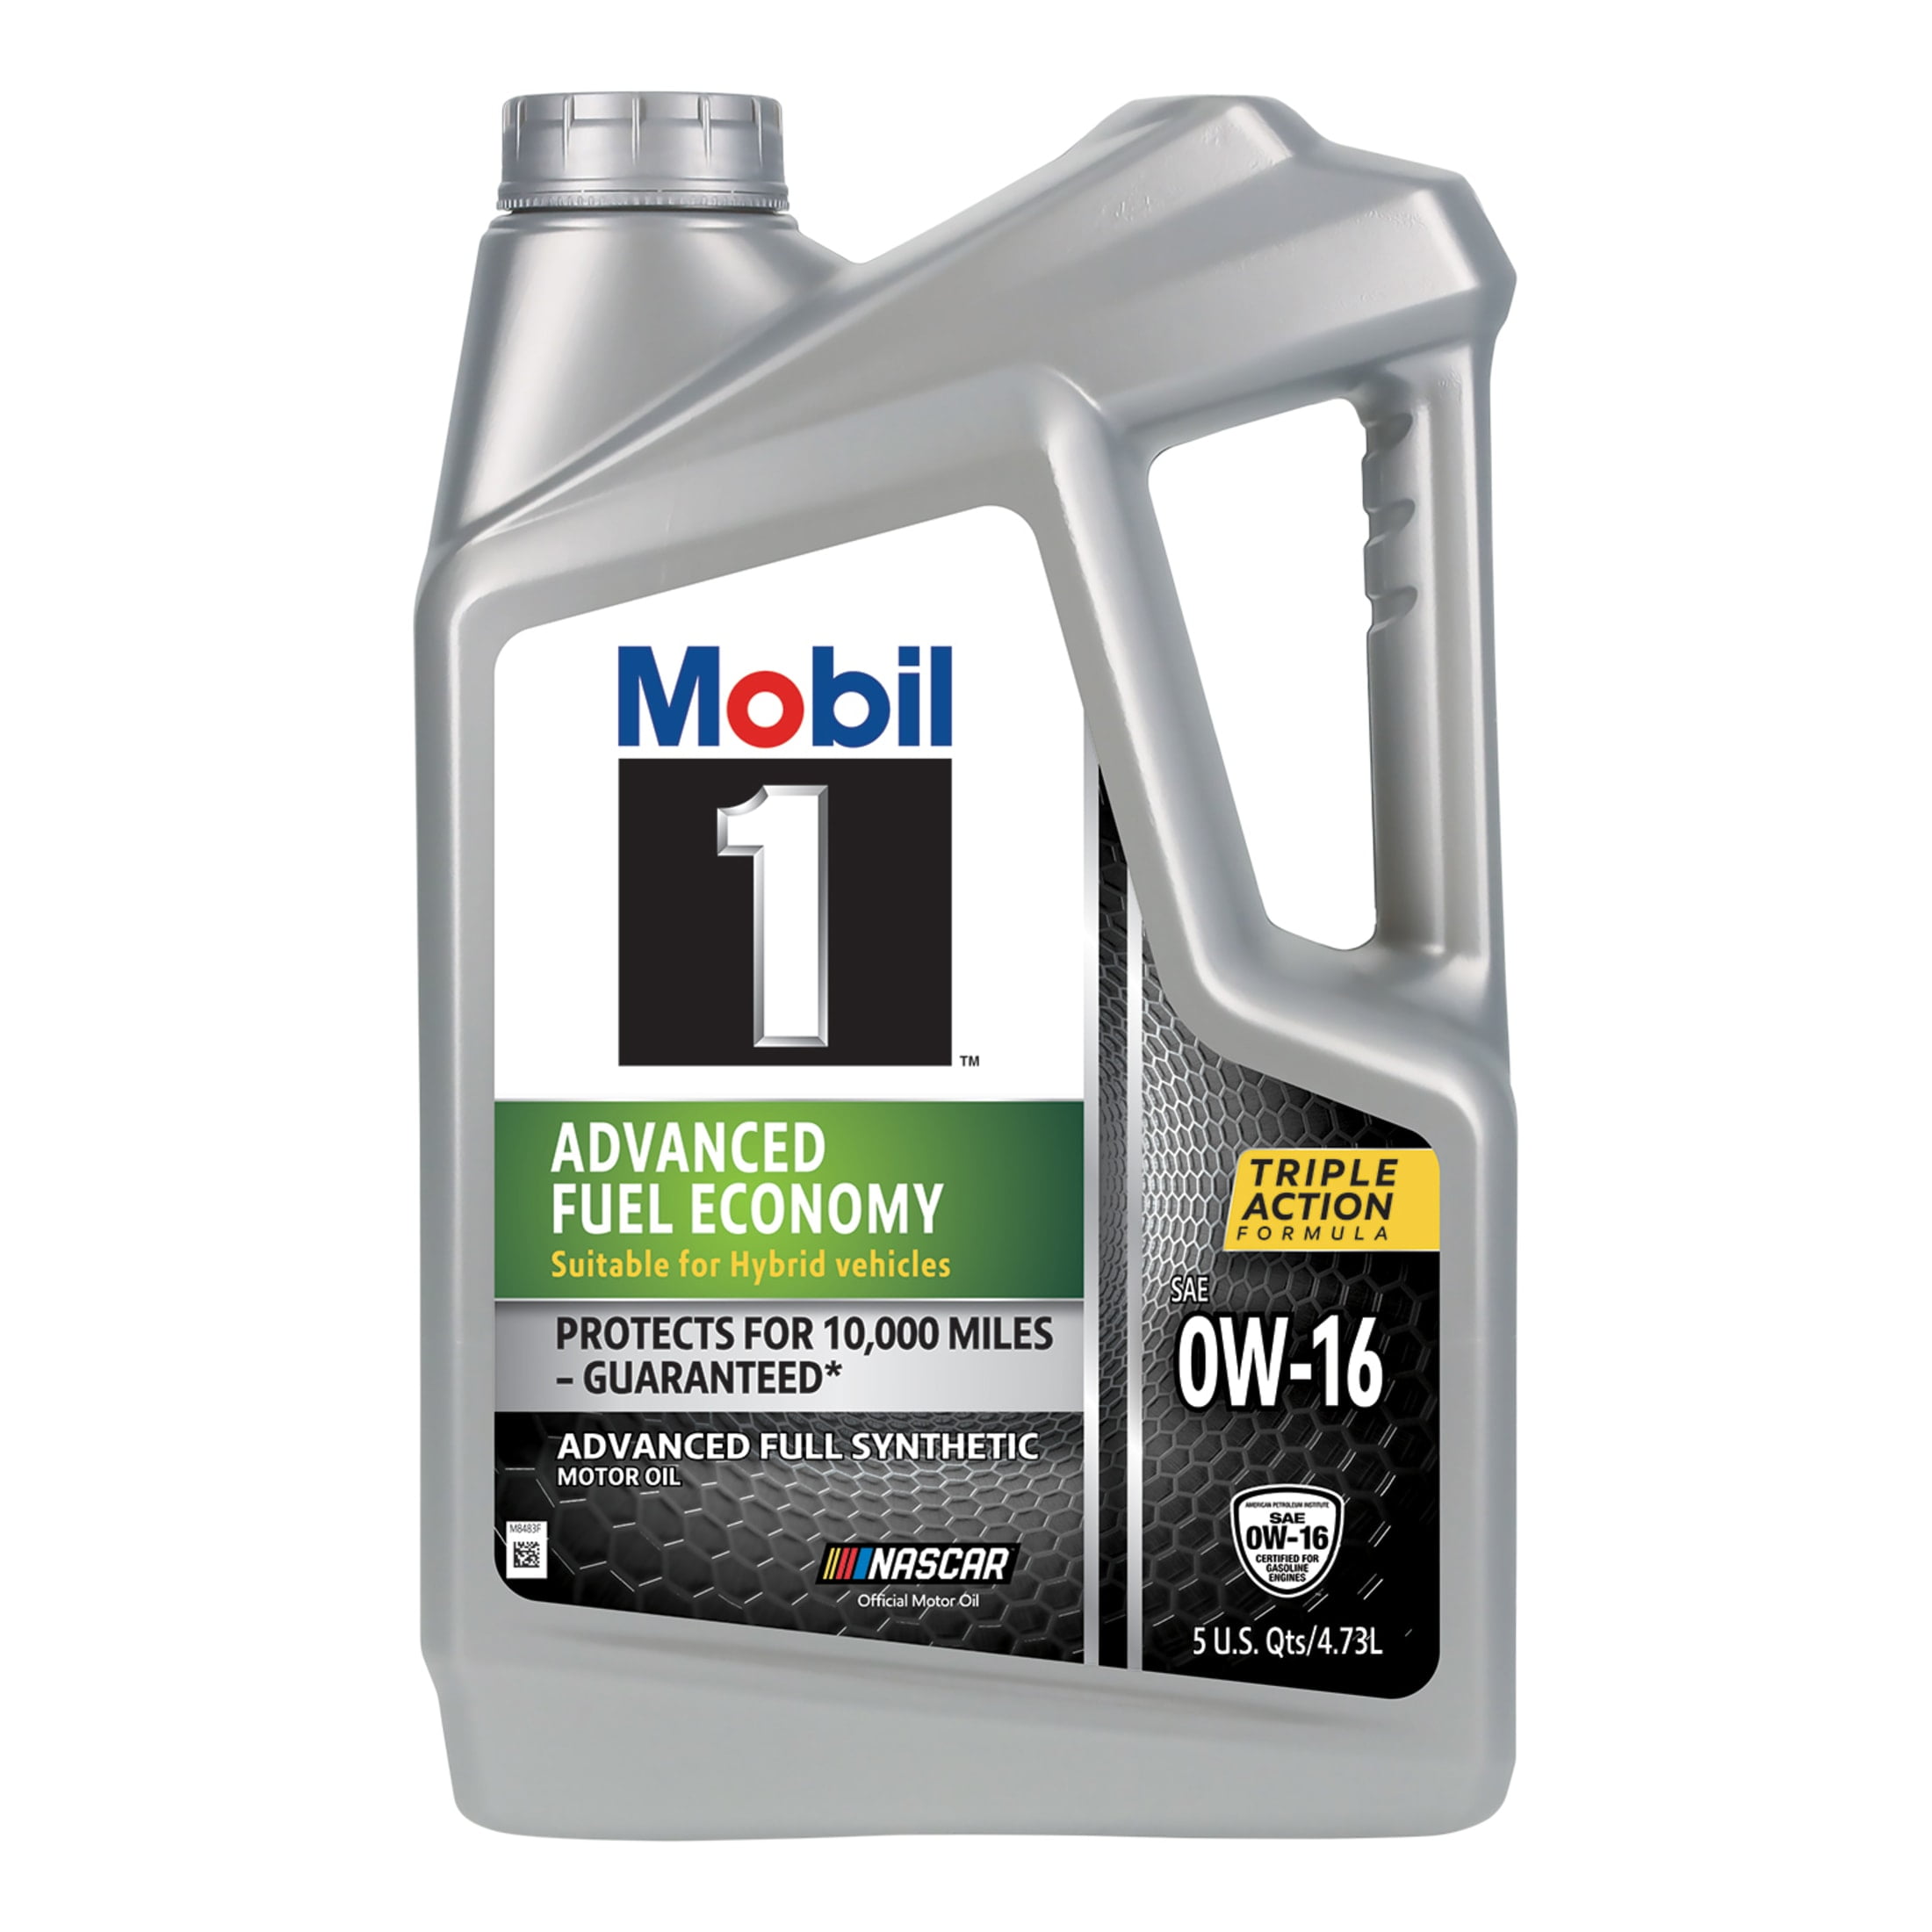 Mobil 1 5 Quart 0W-16 Advanced Fuel Economy Full Synthetic Motor Oil